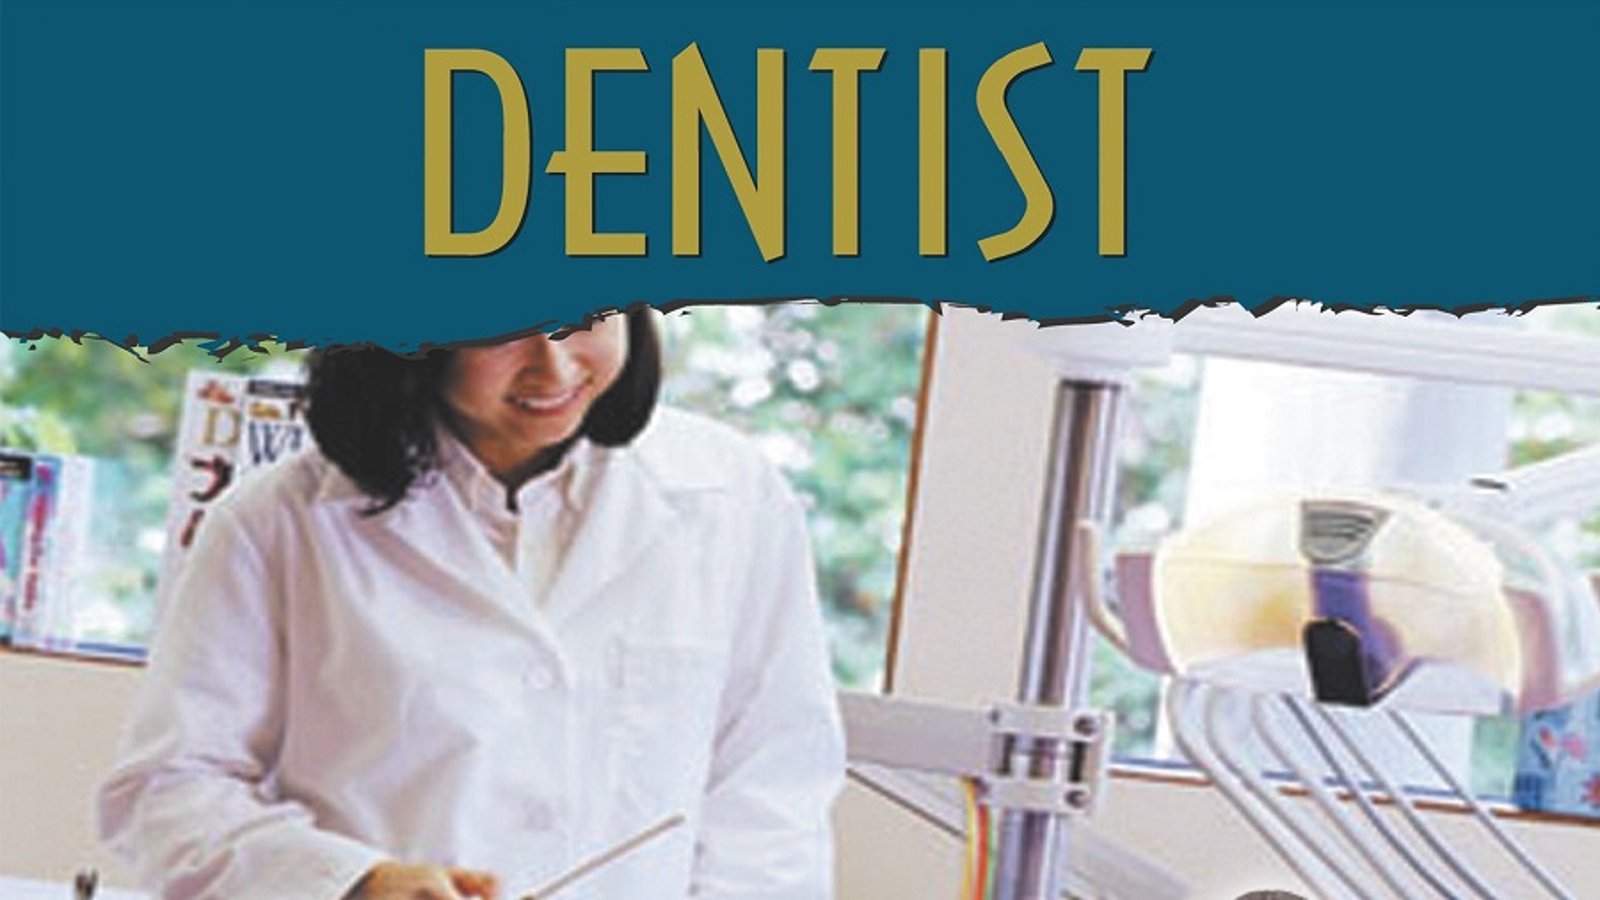 Tell Me How Career Series: Dentist